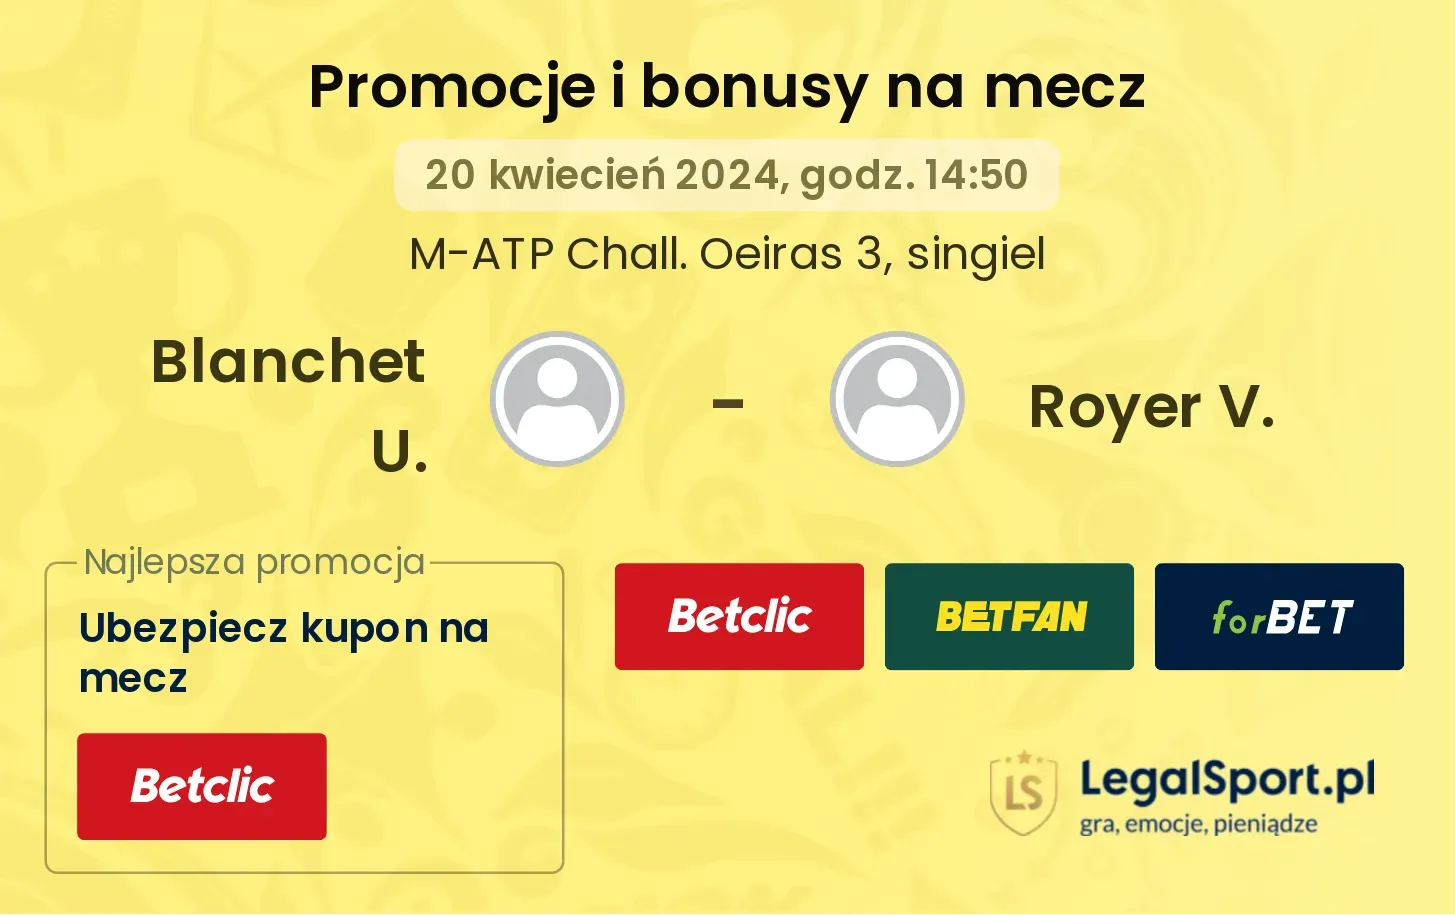 Blanchet U. - Royer V. promocje bonusy na mecz